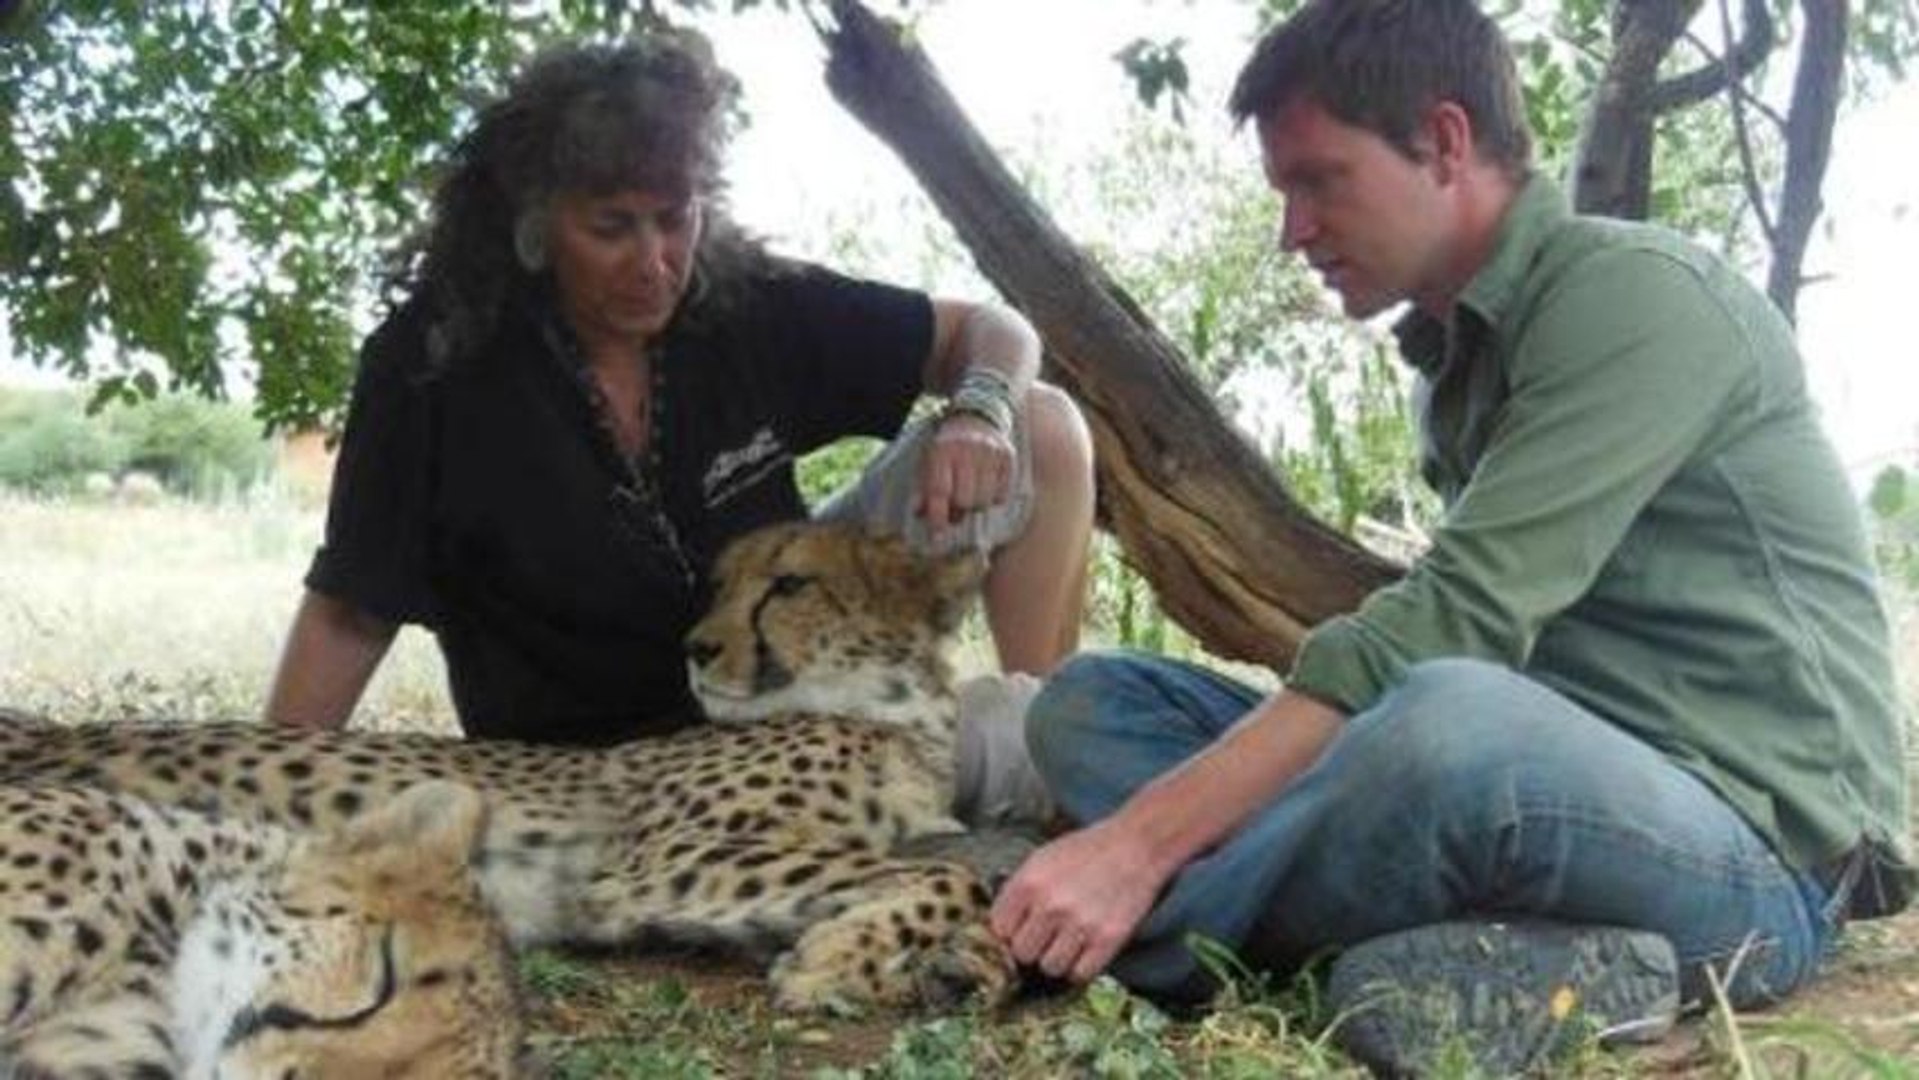 earthrise - Saving Namibia's Cheetahs